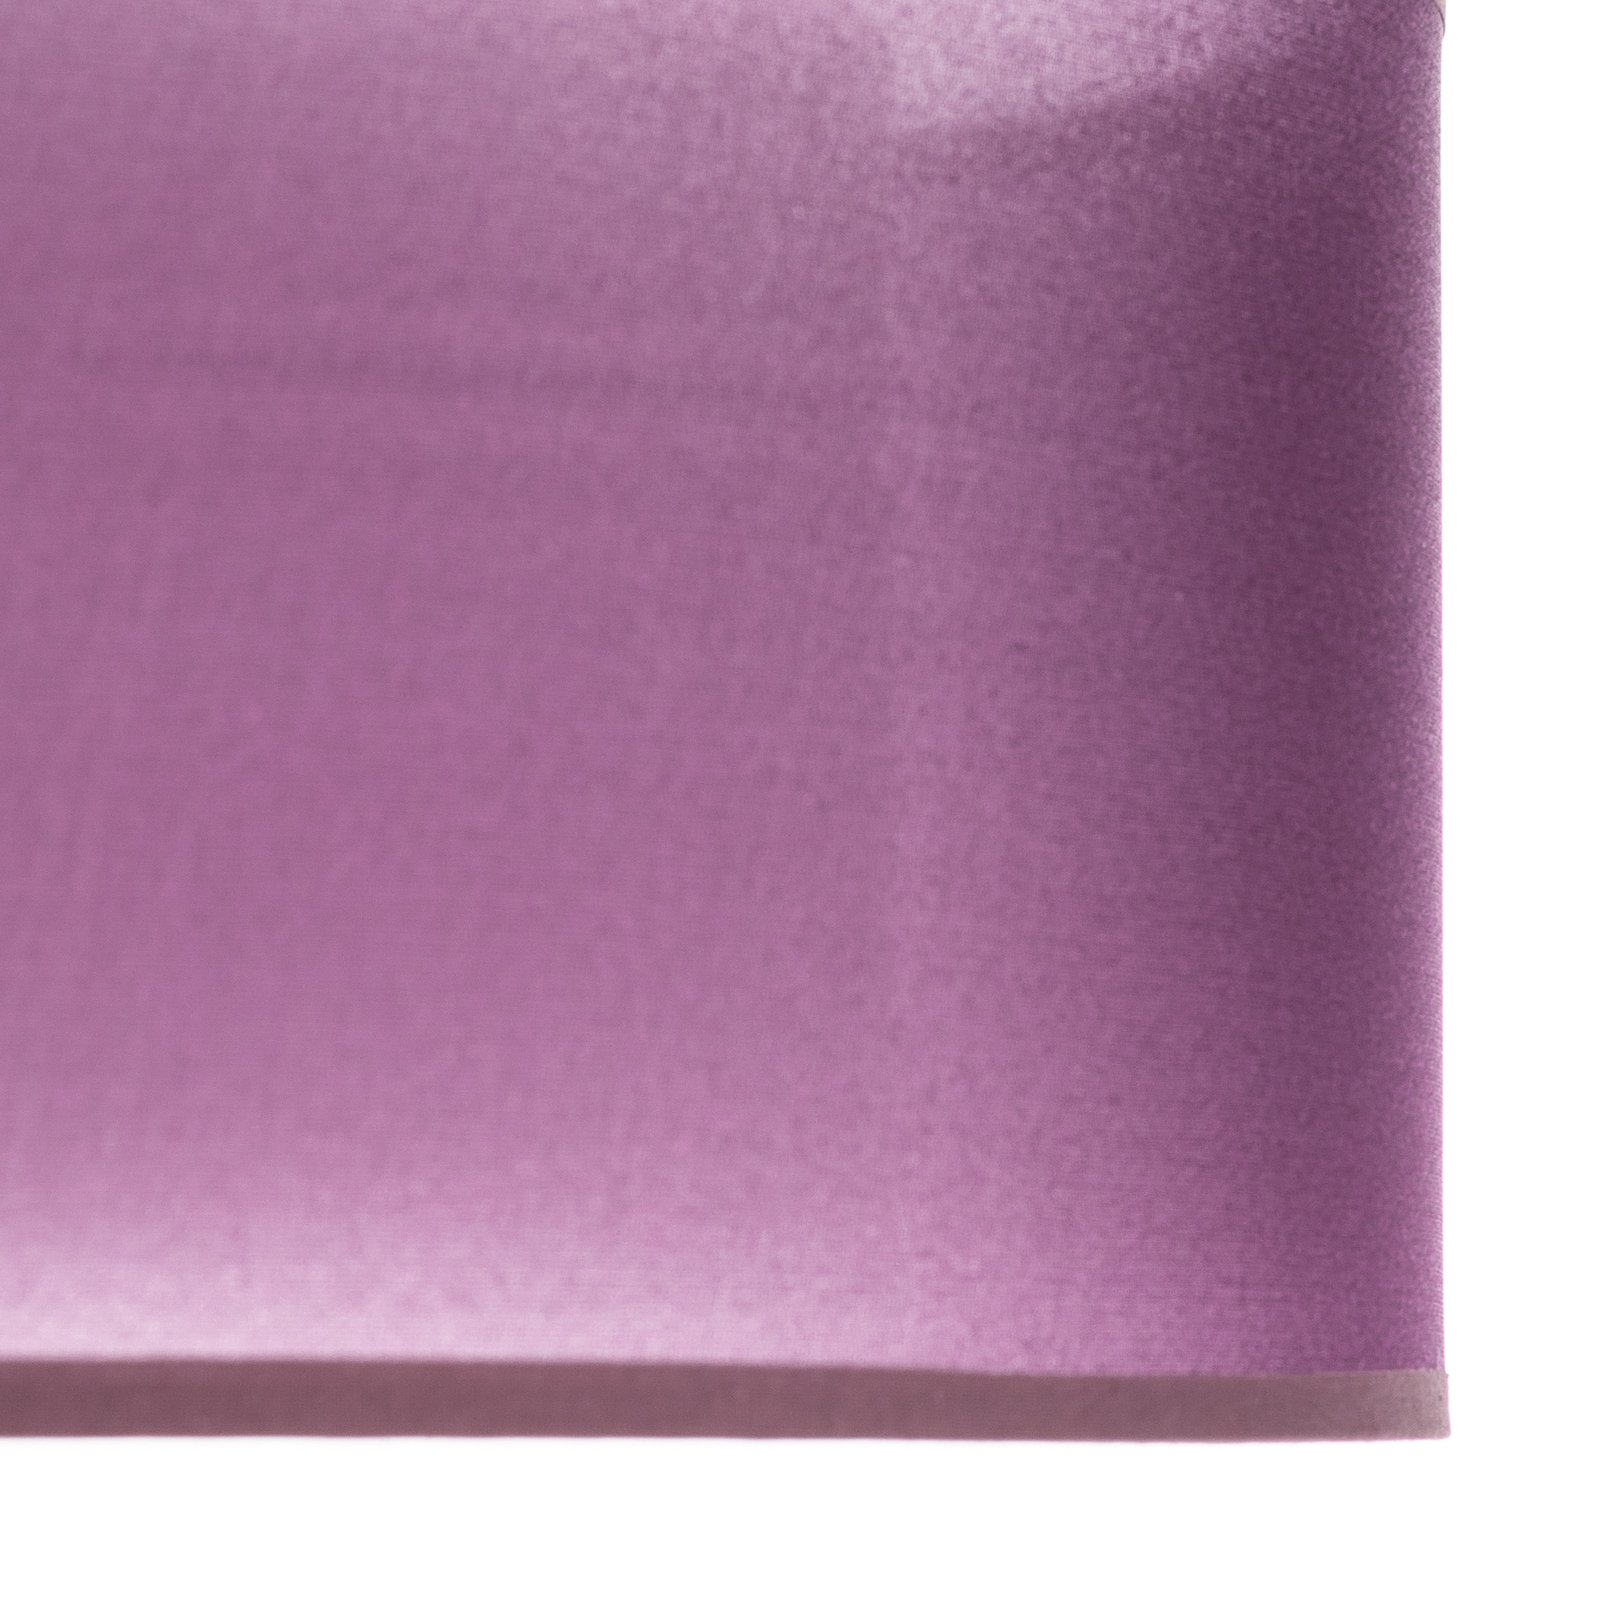 Euluna Tibu plafonnier rond, tissu transparent, Ø50cm, violet